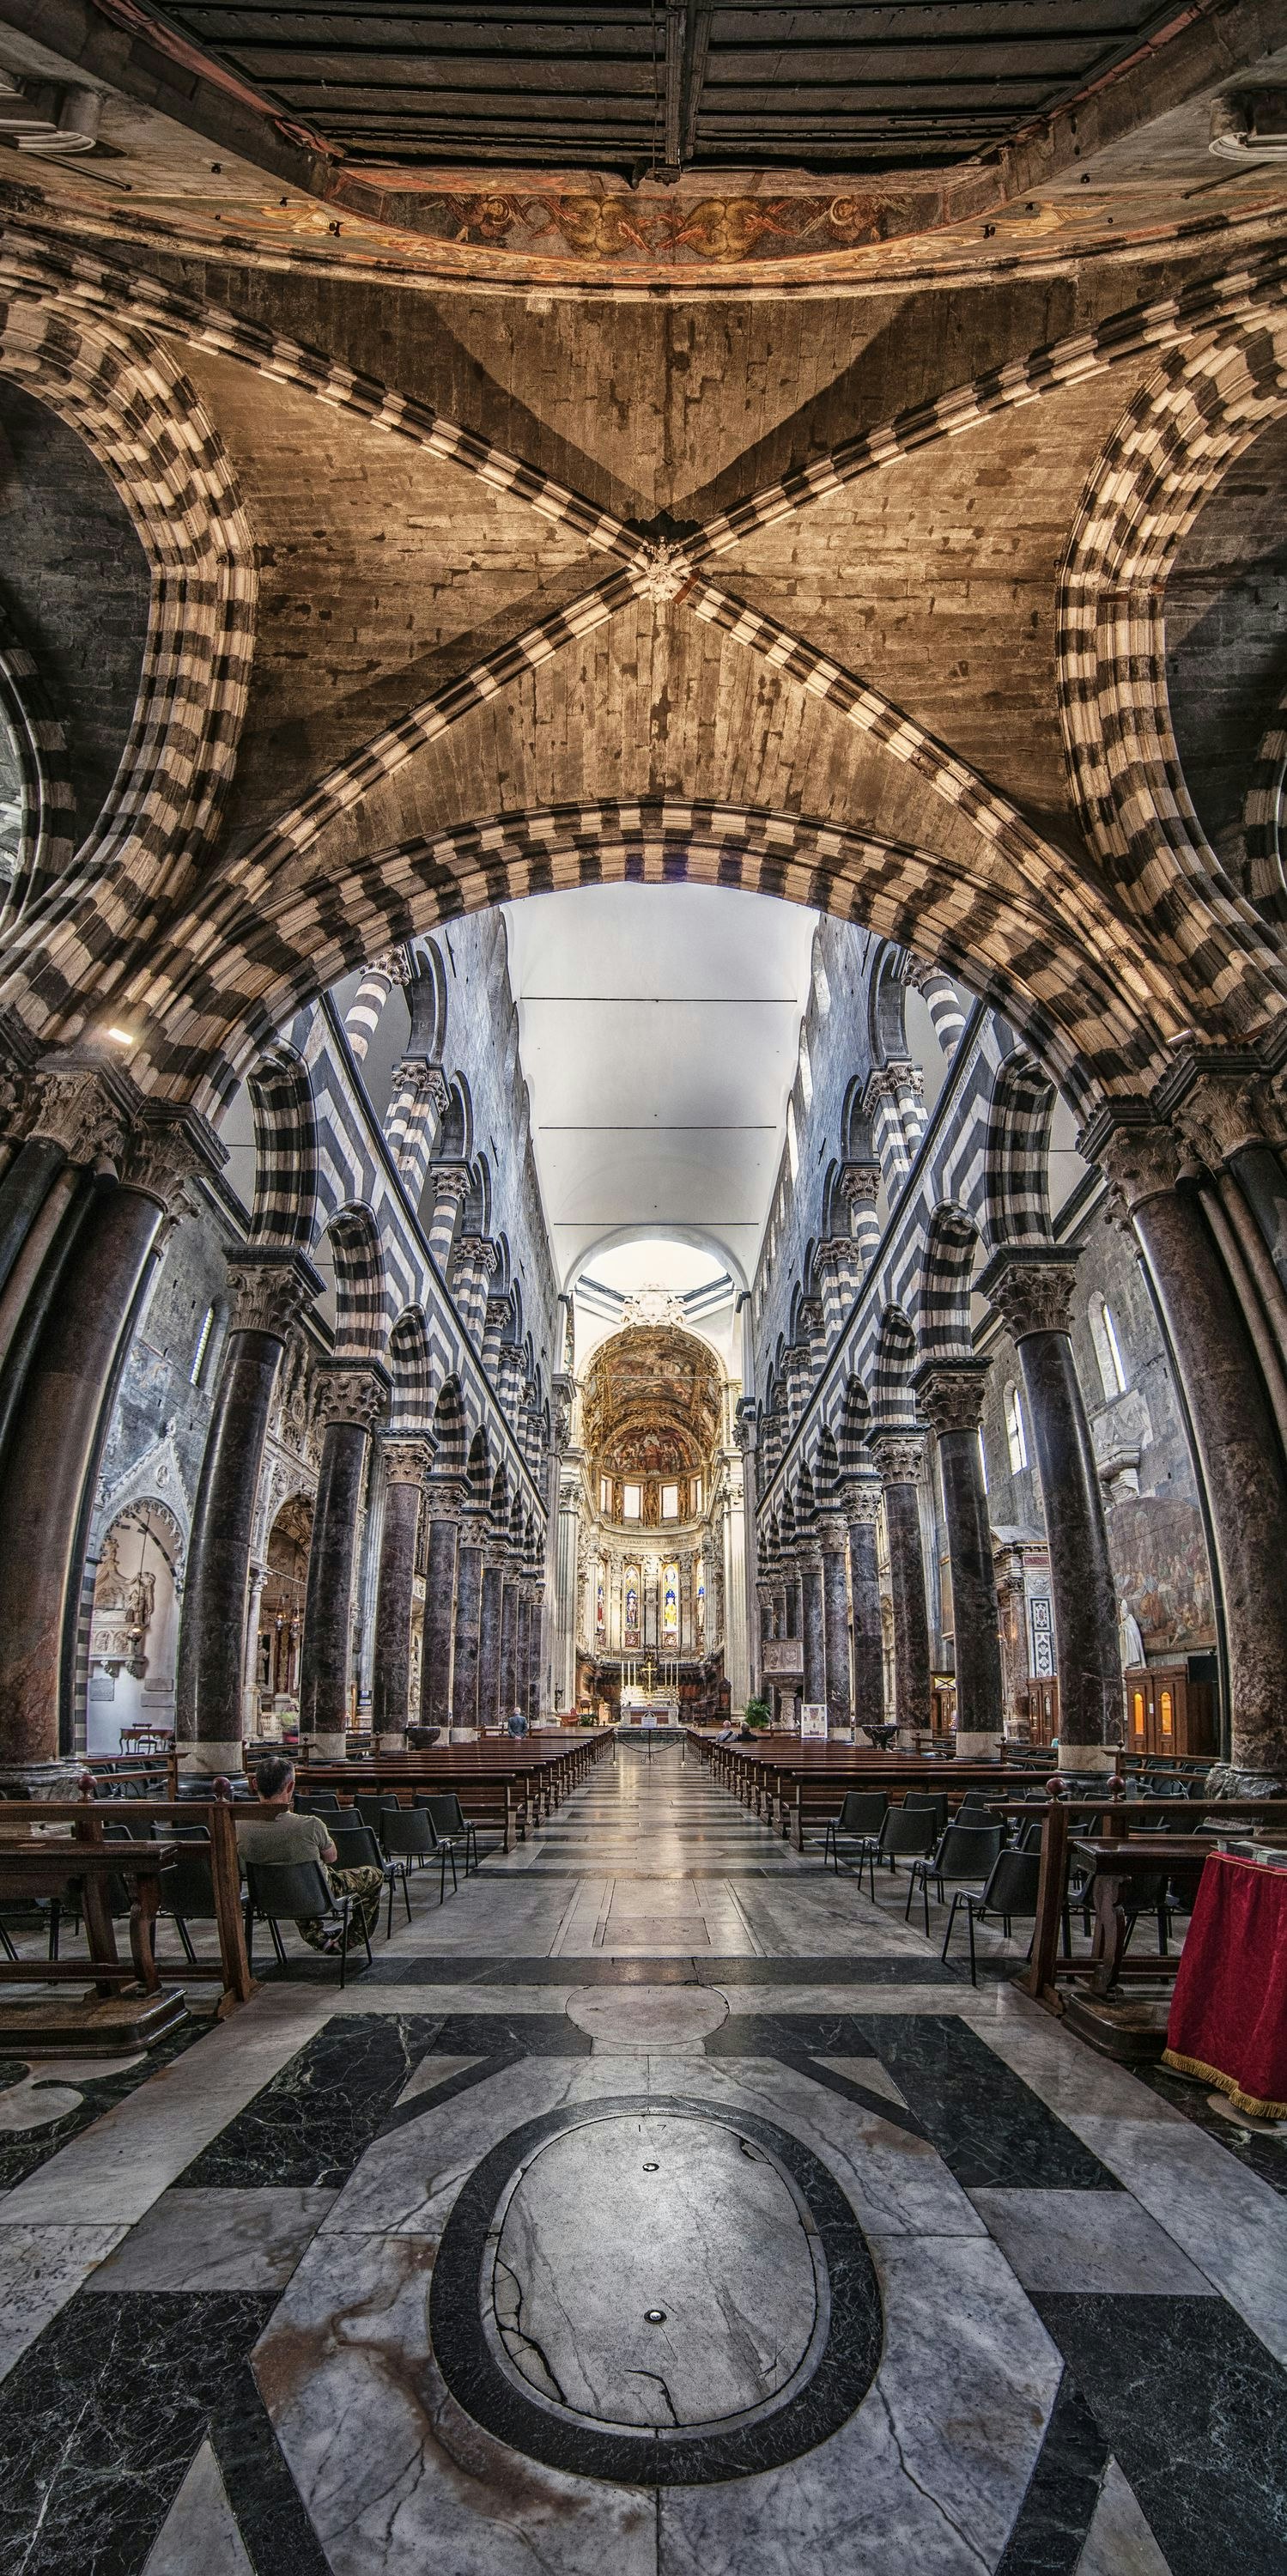 Travel News - San Lorenzo Cathedral - Genoa, Italy4